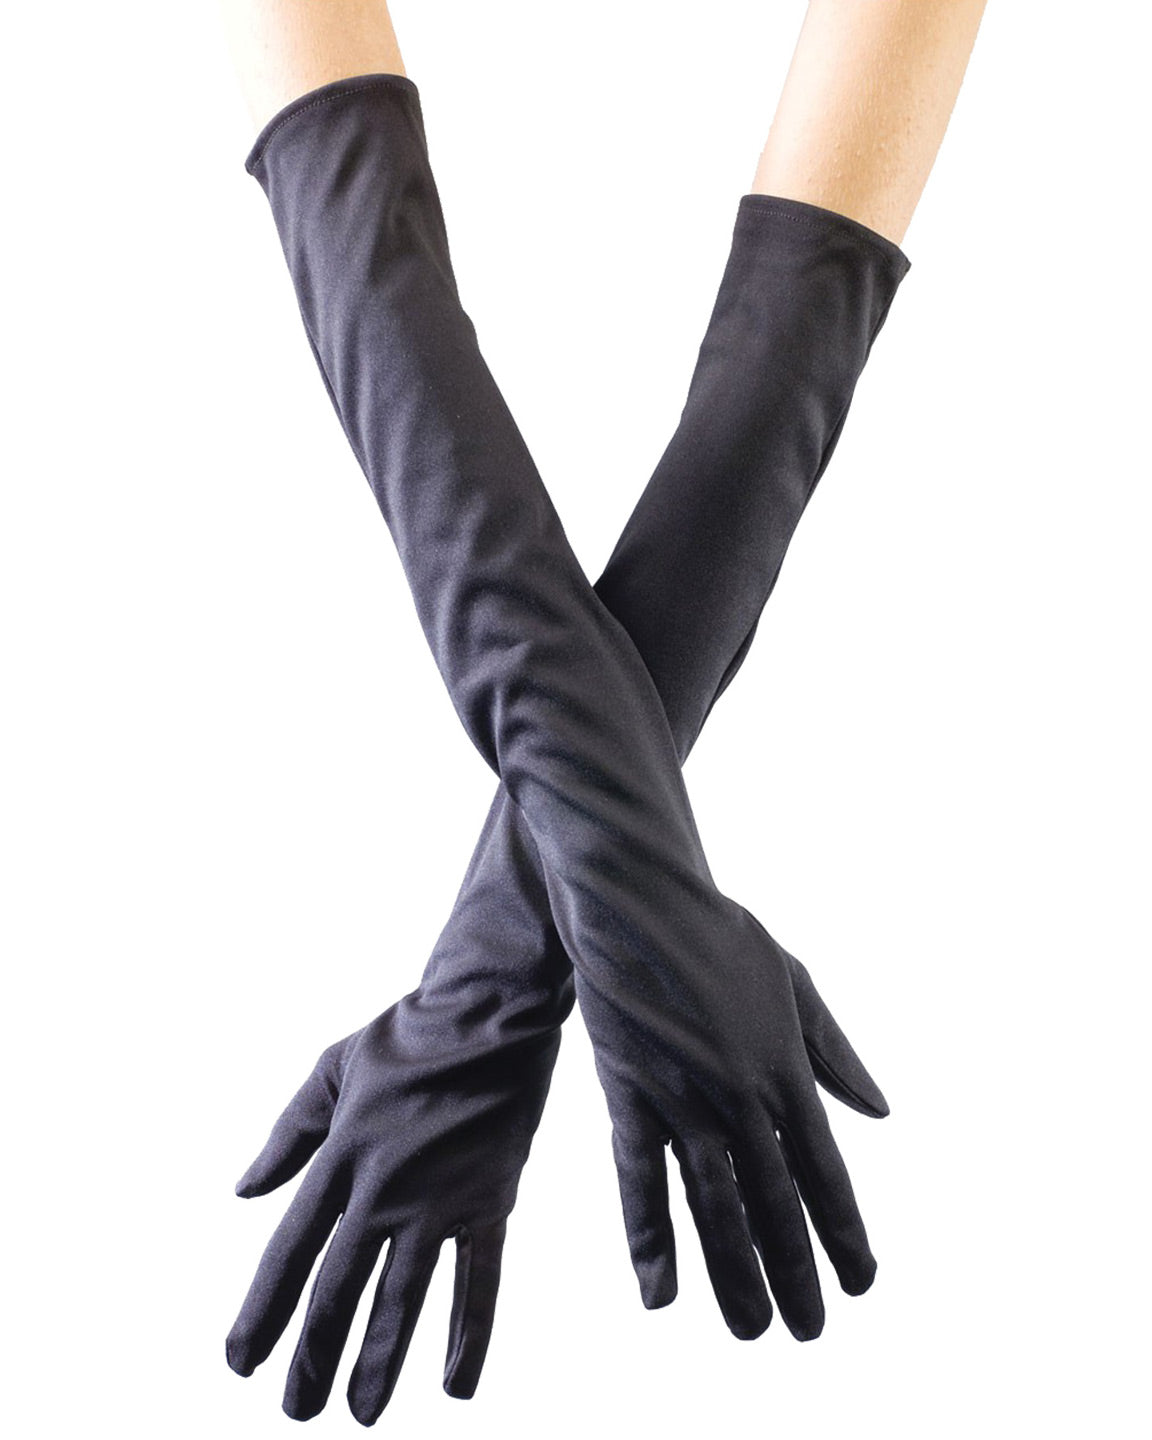 Gloves Opera Child Size